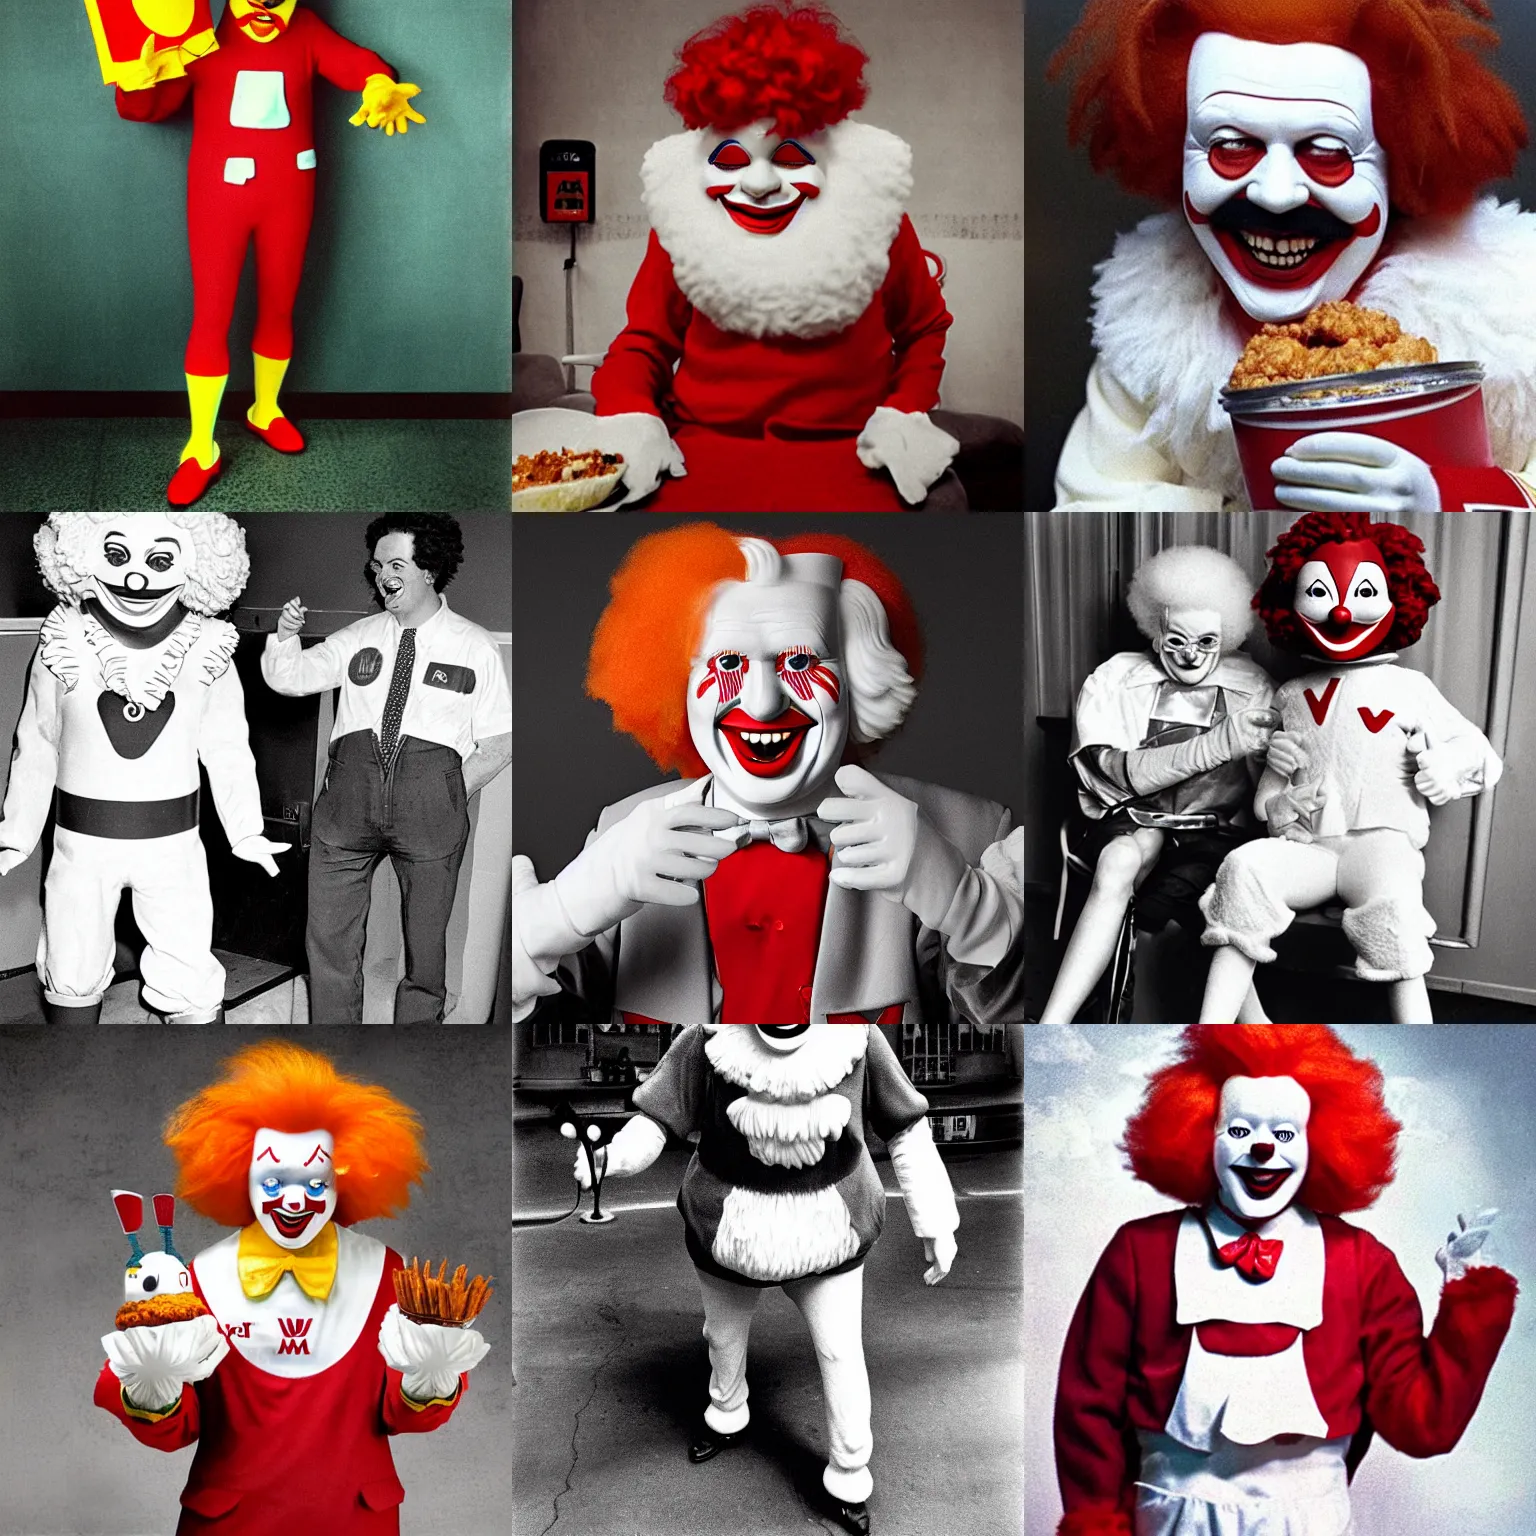 Prompt: Creepy photo of Ronald McDonald as KFC Mascot